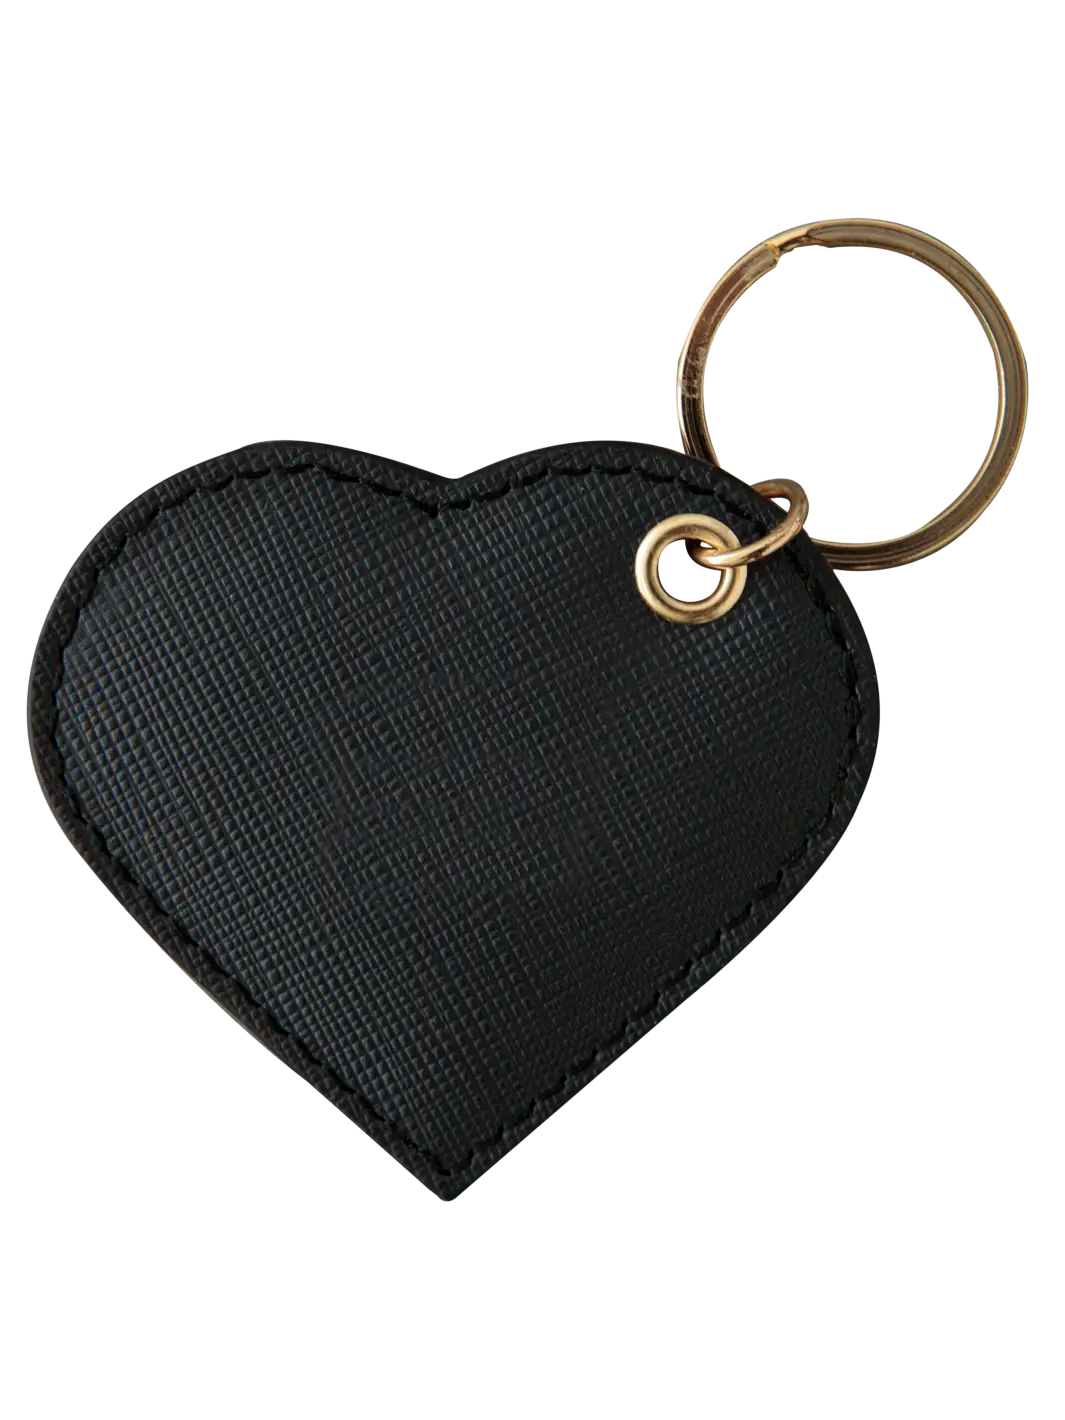 MODE. Heart Key ring - Outlet Night Black Key rings